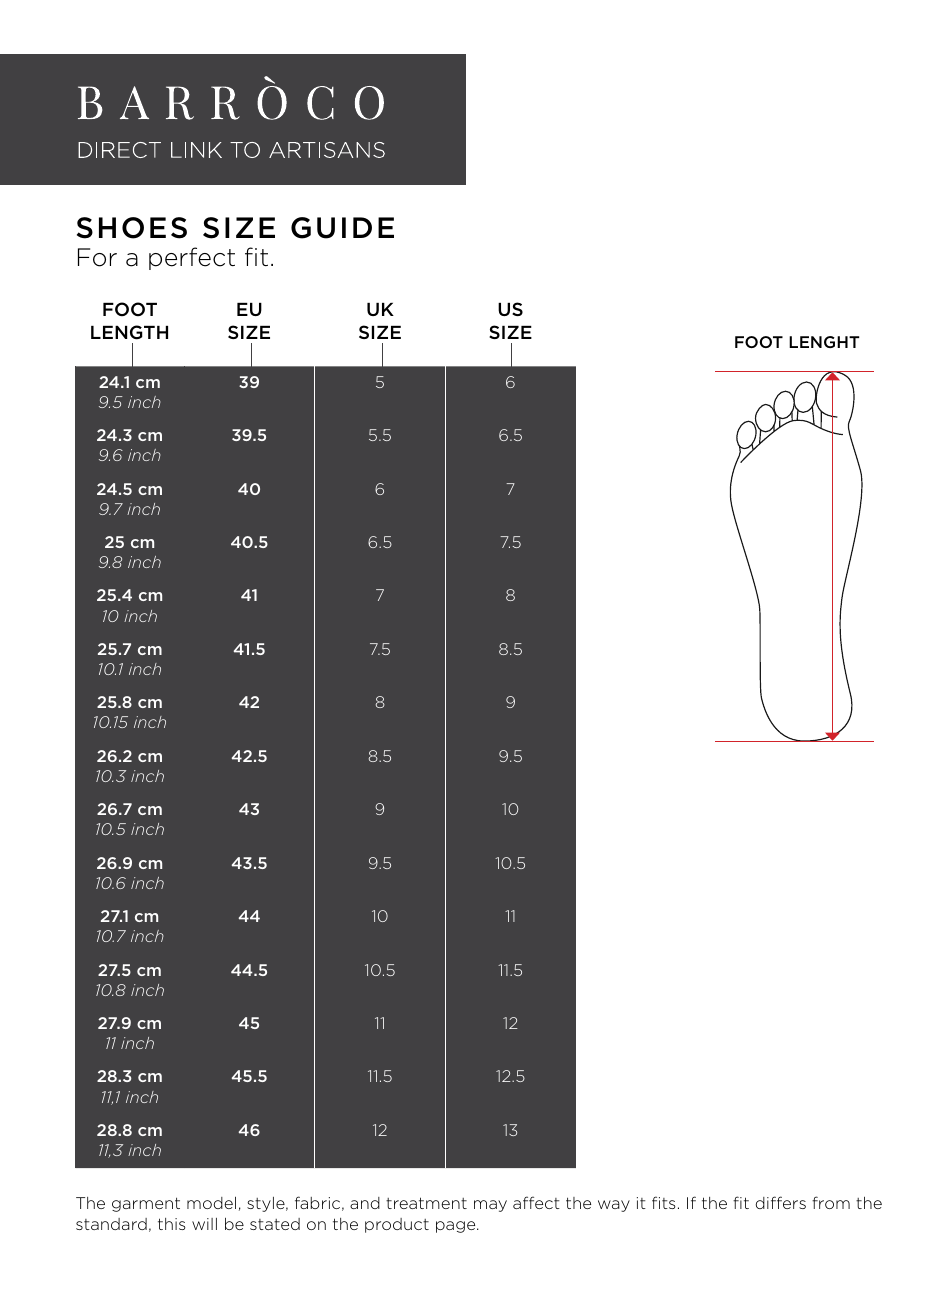 Shoe Size Guide - Barroco, Page 1